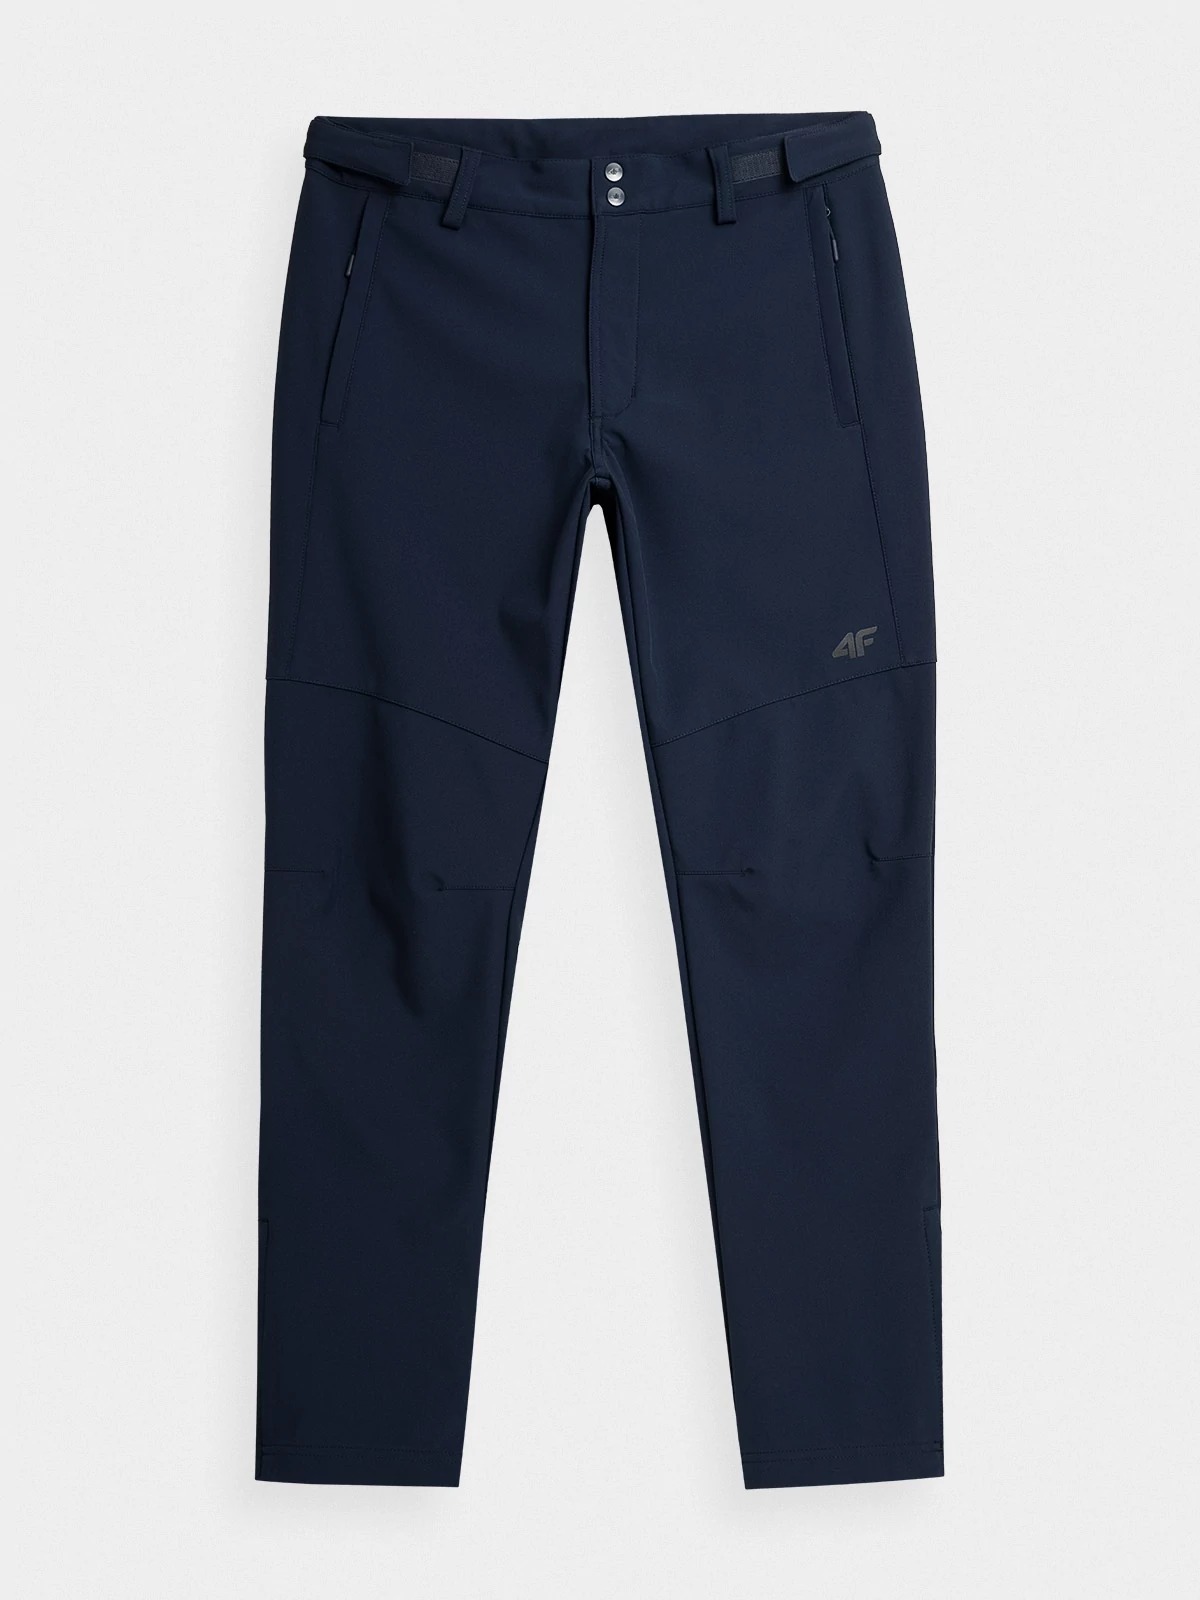 фото Спортивные брюки мужские 4f h4z21-spmt001 синие l